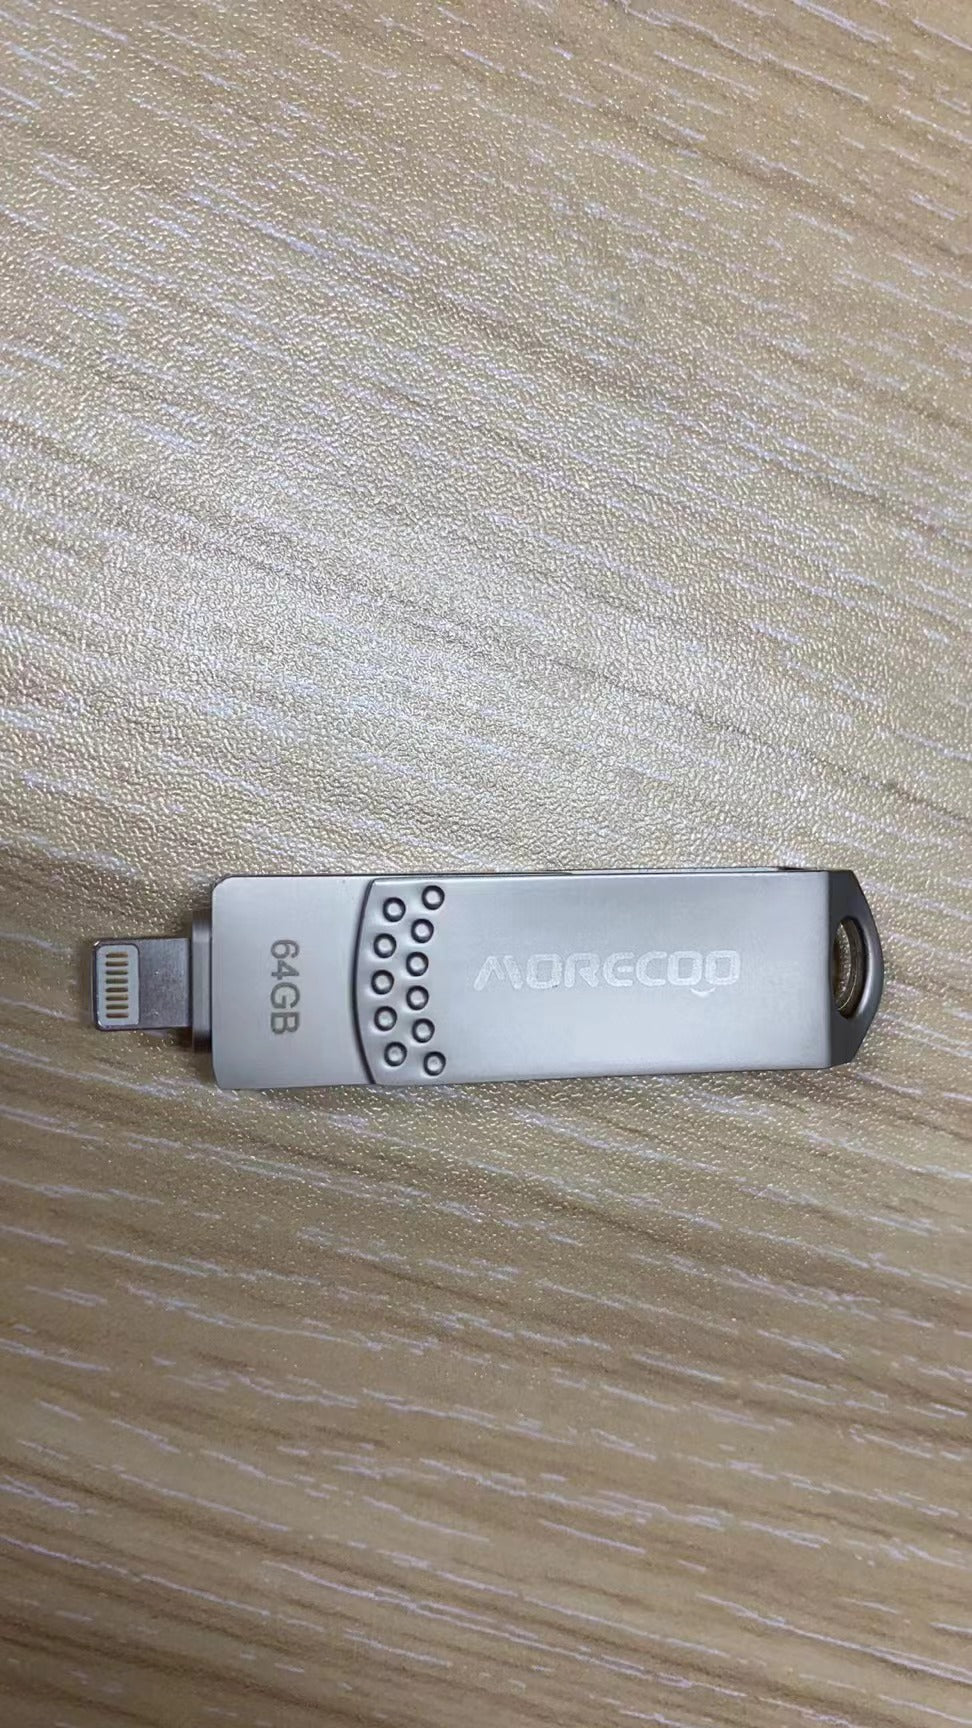 MORECOO Blank USB fIash drives,USB Flash Drive 64GB Waterproof USB Stick,Thumb Drive Metal Memory Stick for Laptop,PC.